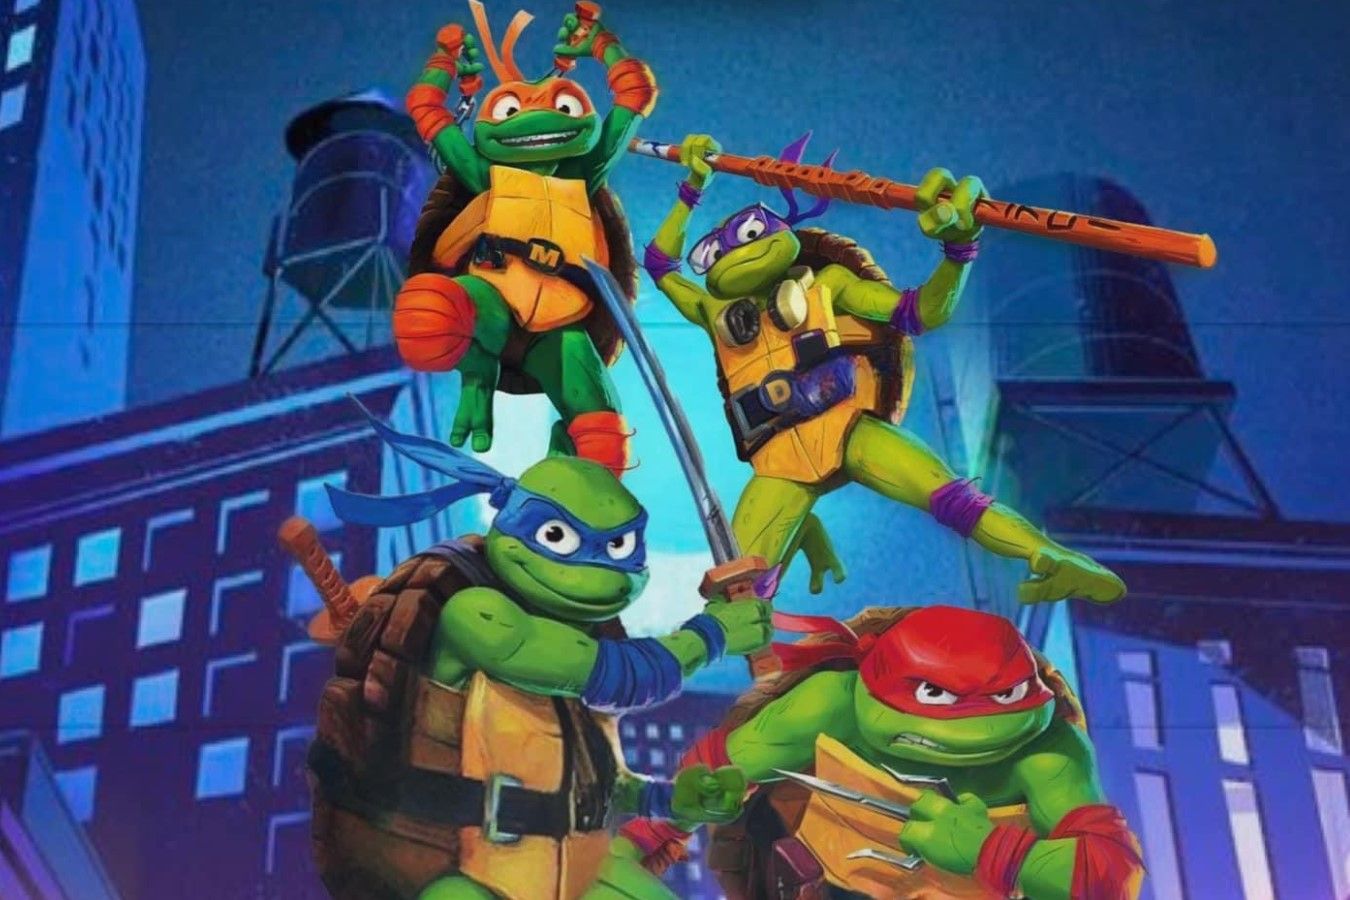 Teenage Mutant Ninja Turtles (серия игр) — Википедия